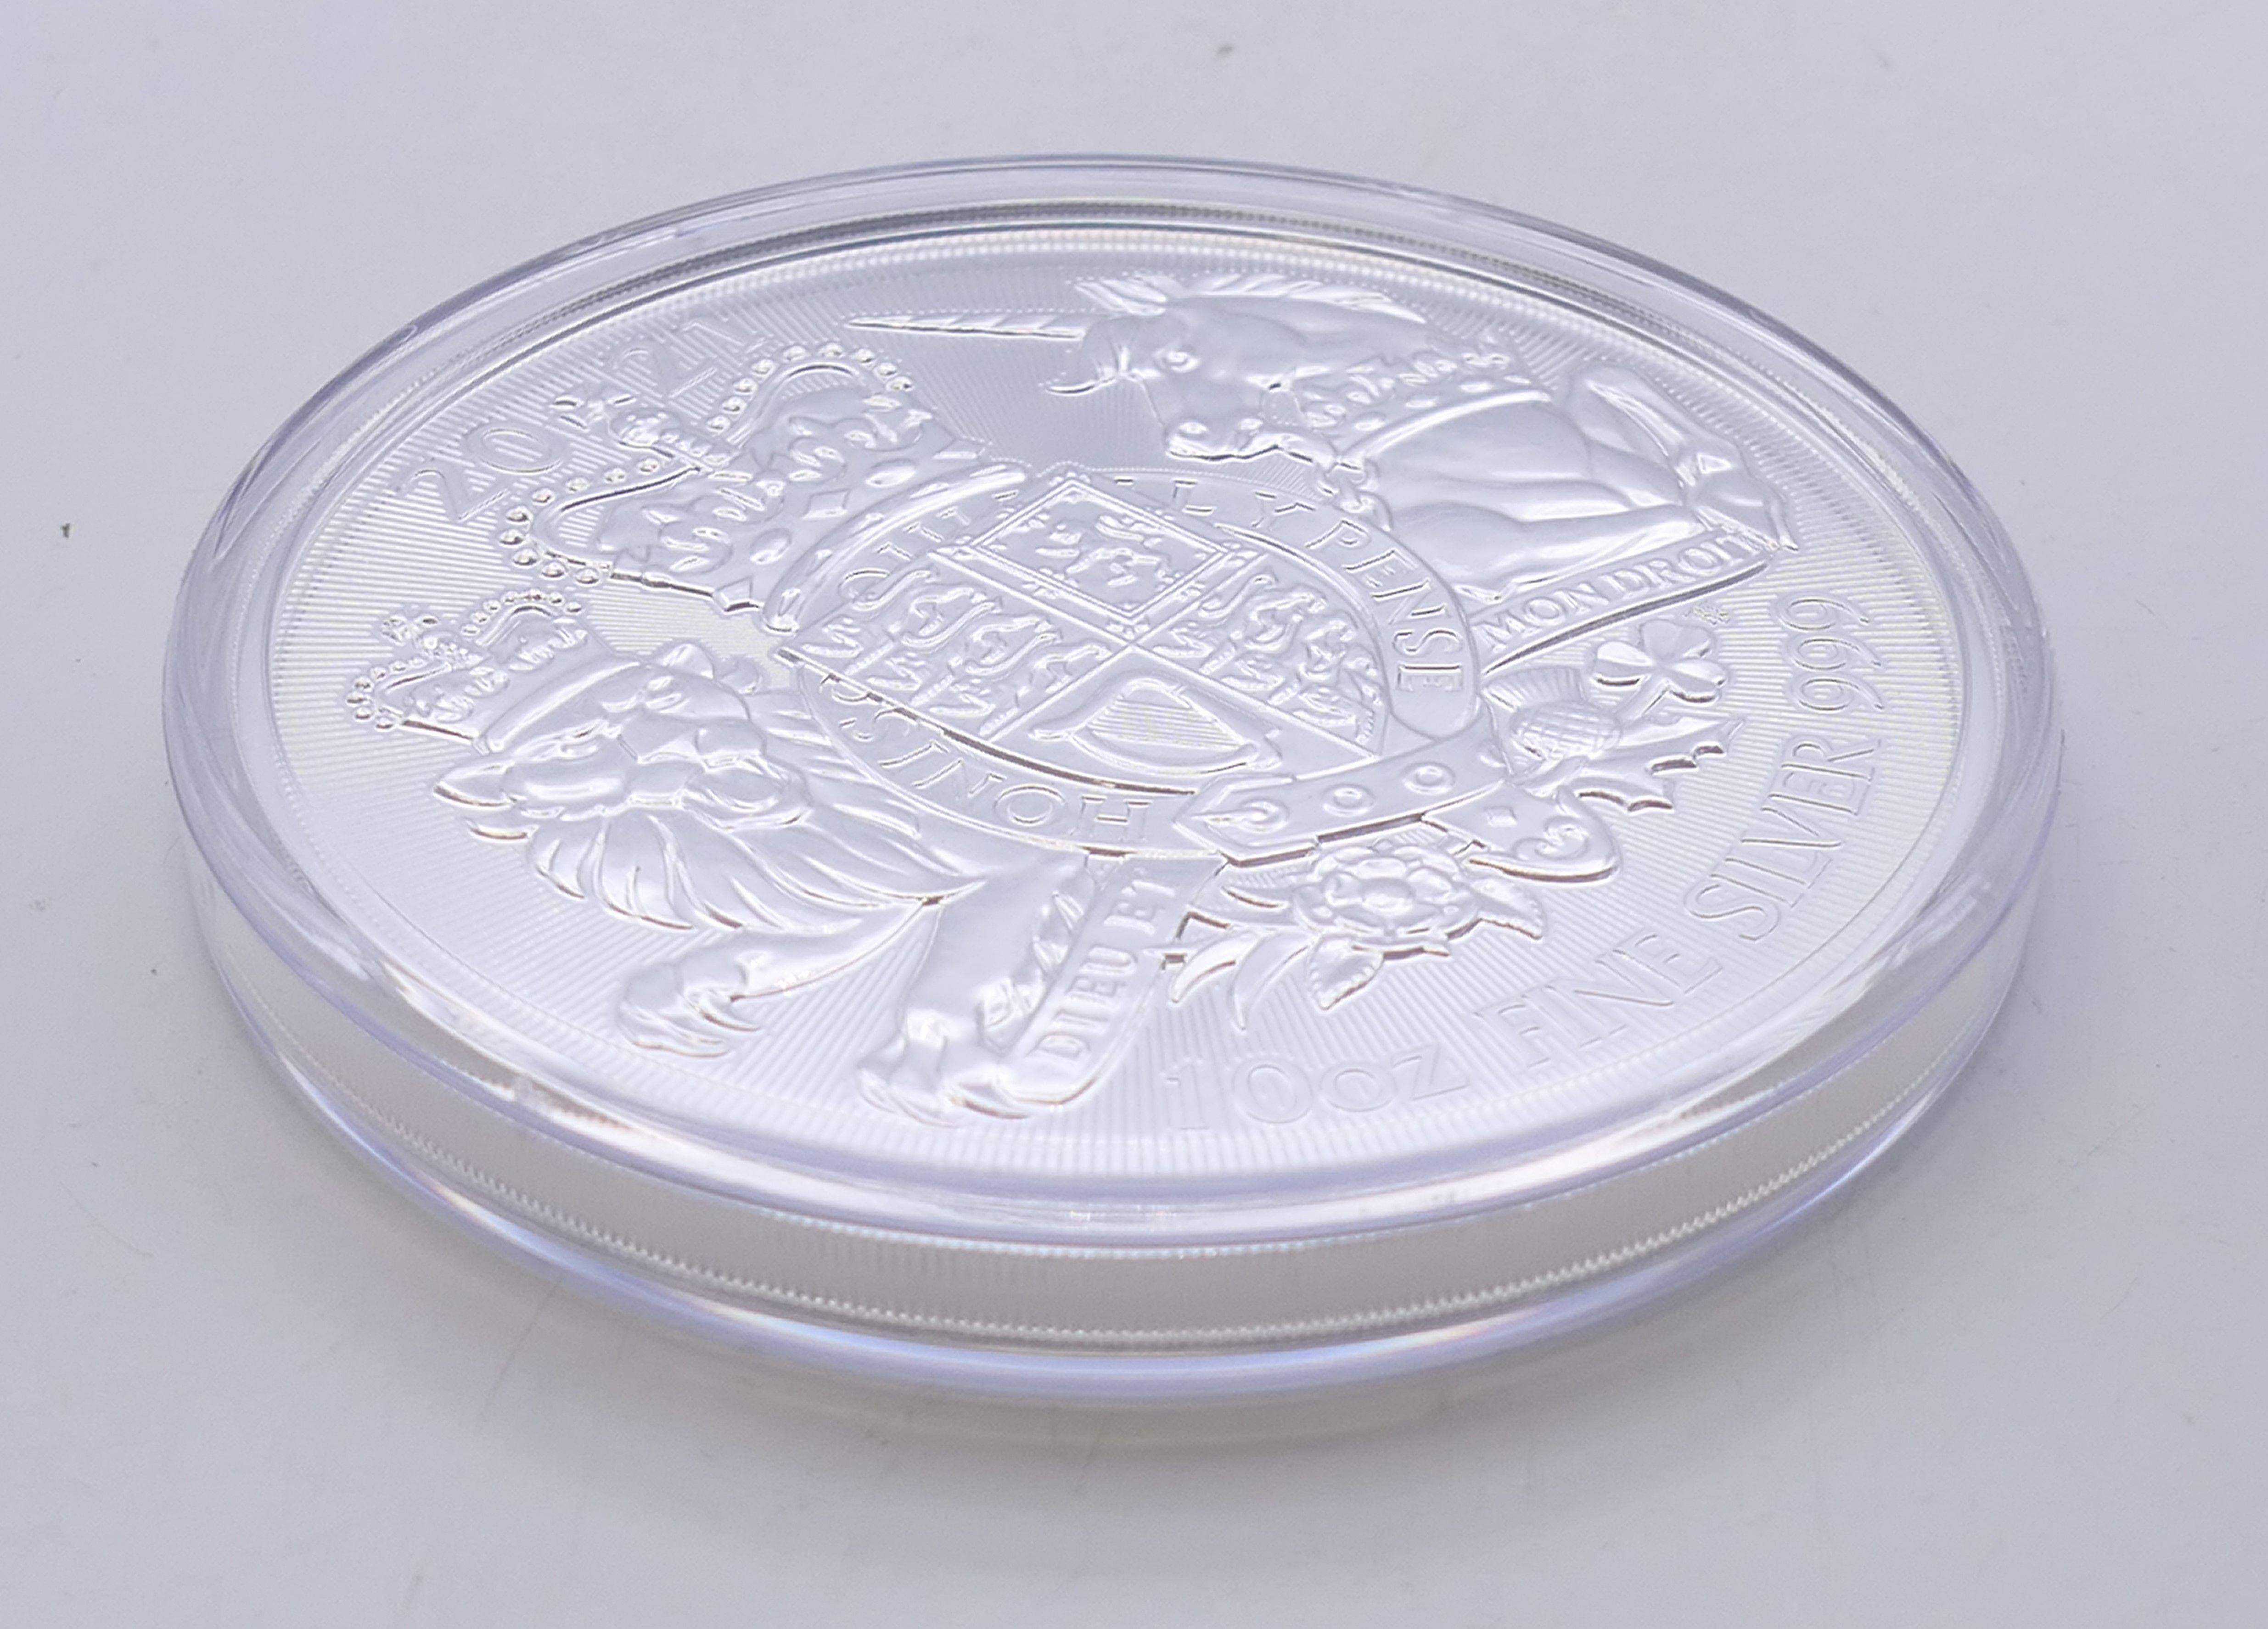 A 2021 10oz fine silver 10 pound coin. - Image 2 of 4